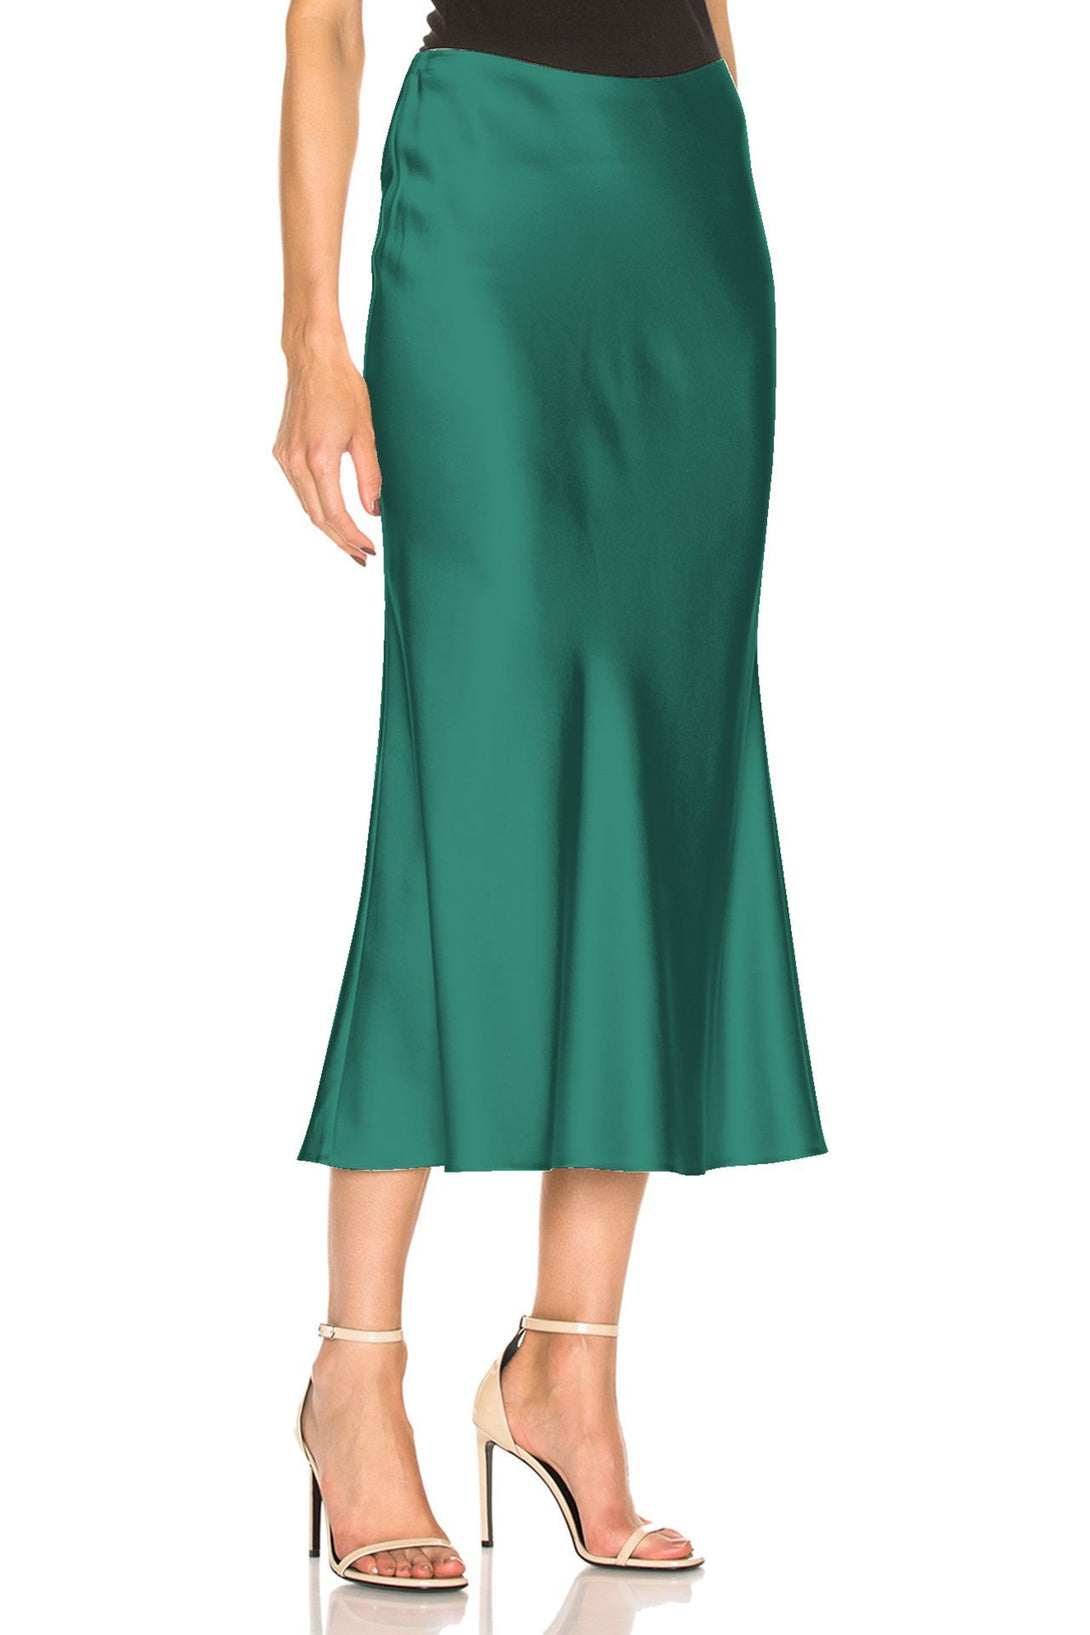 Designer-Silk-Green-Skirt-By-Kyle-Richard